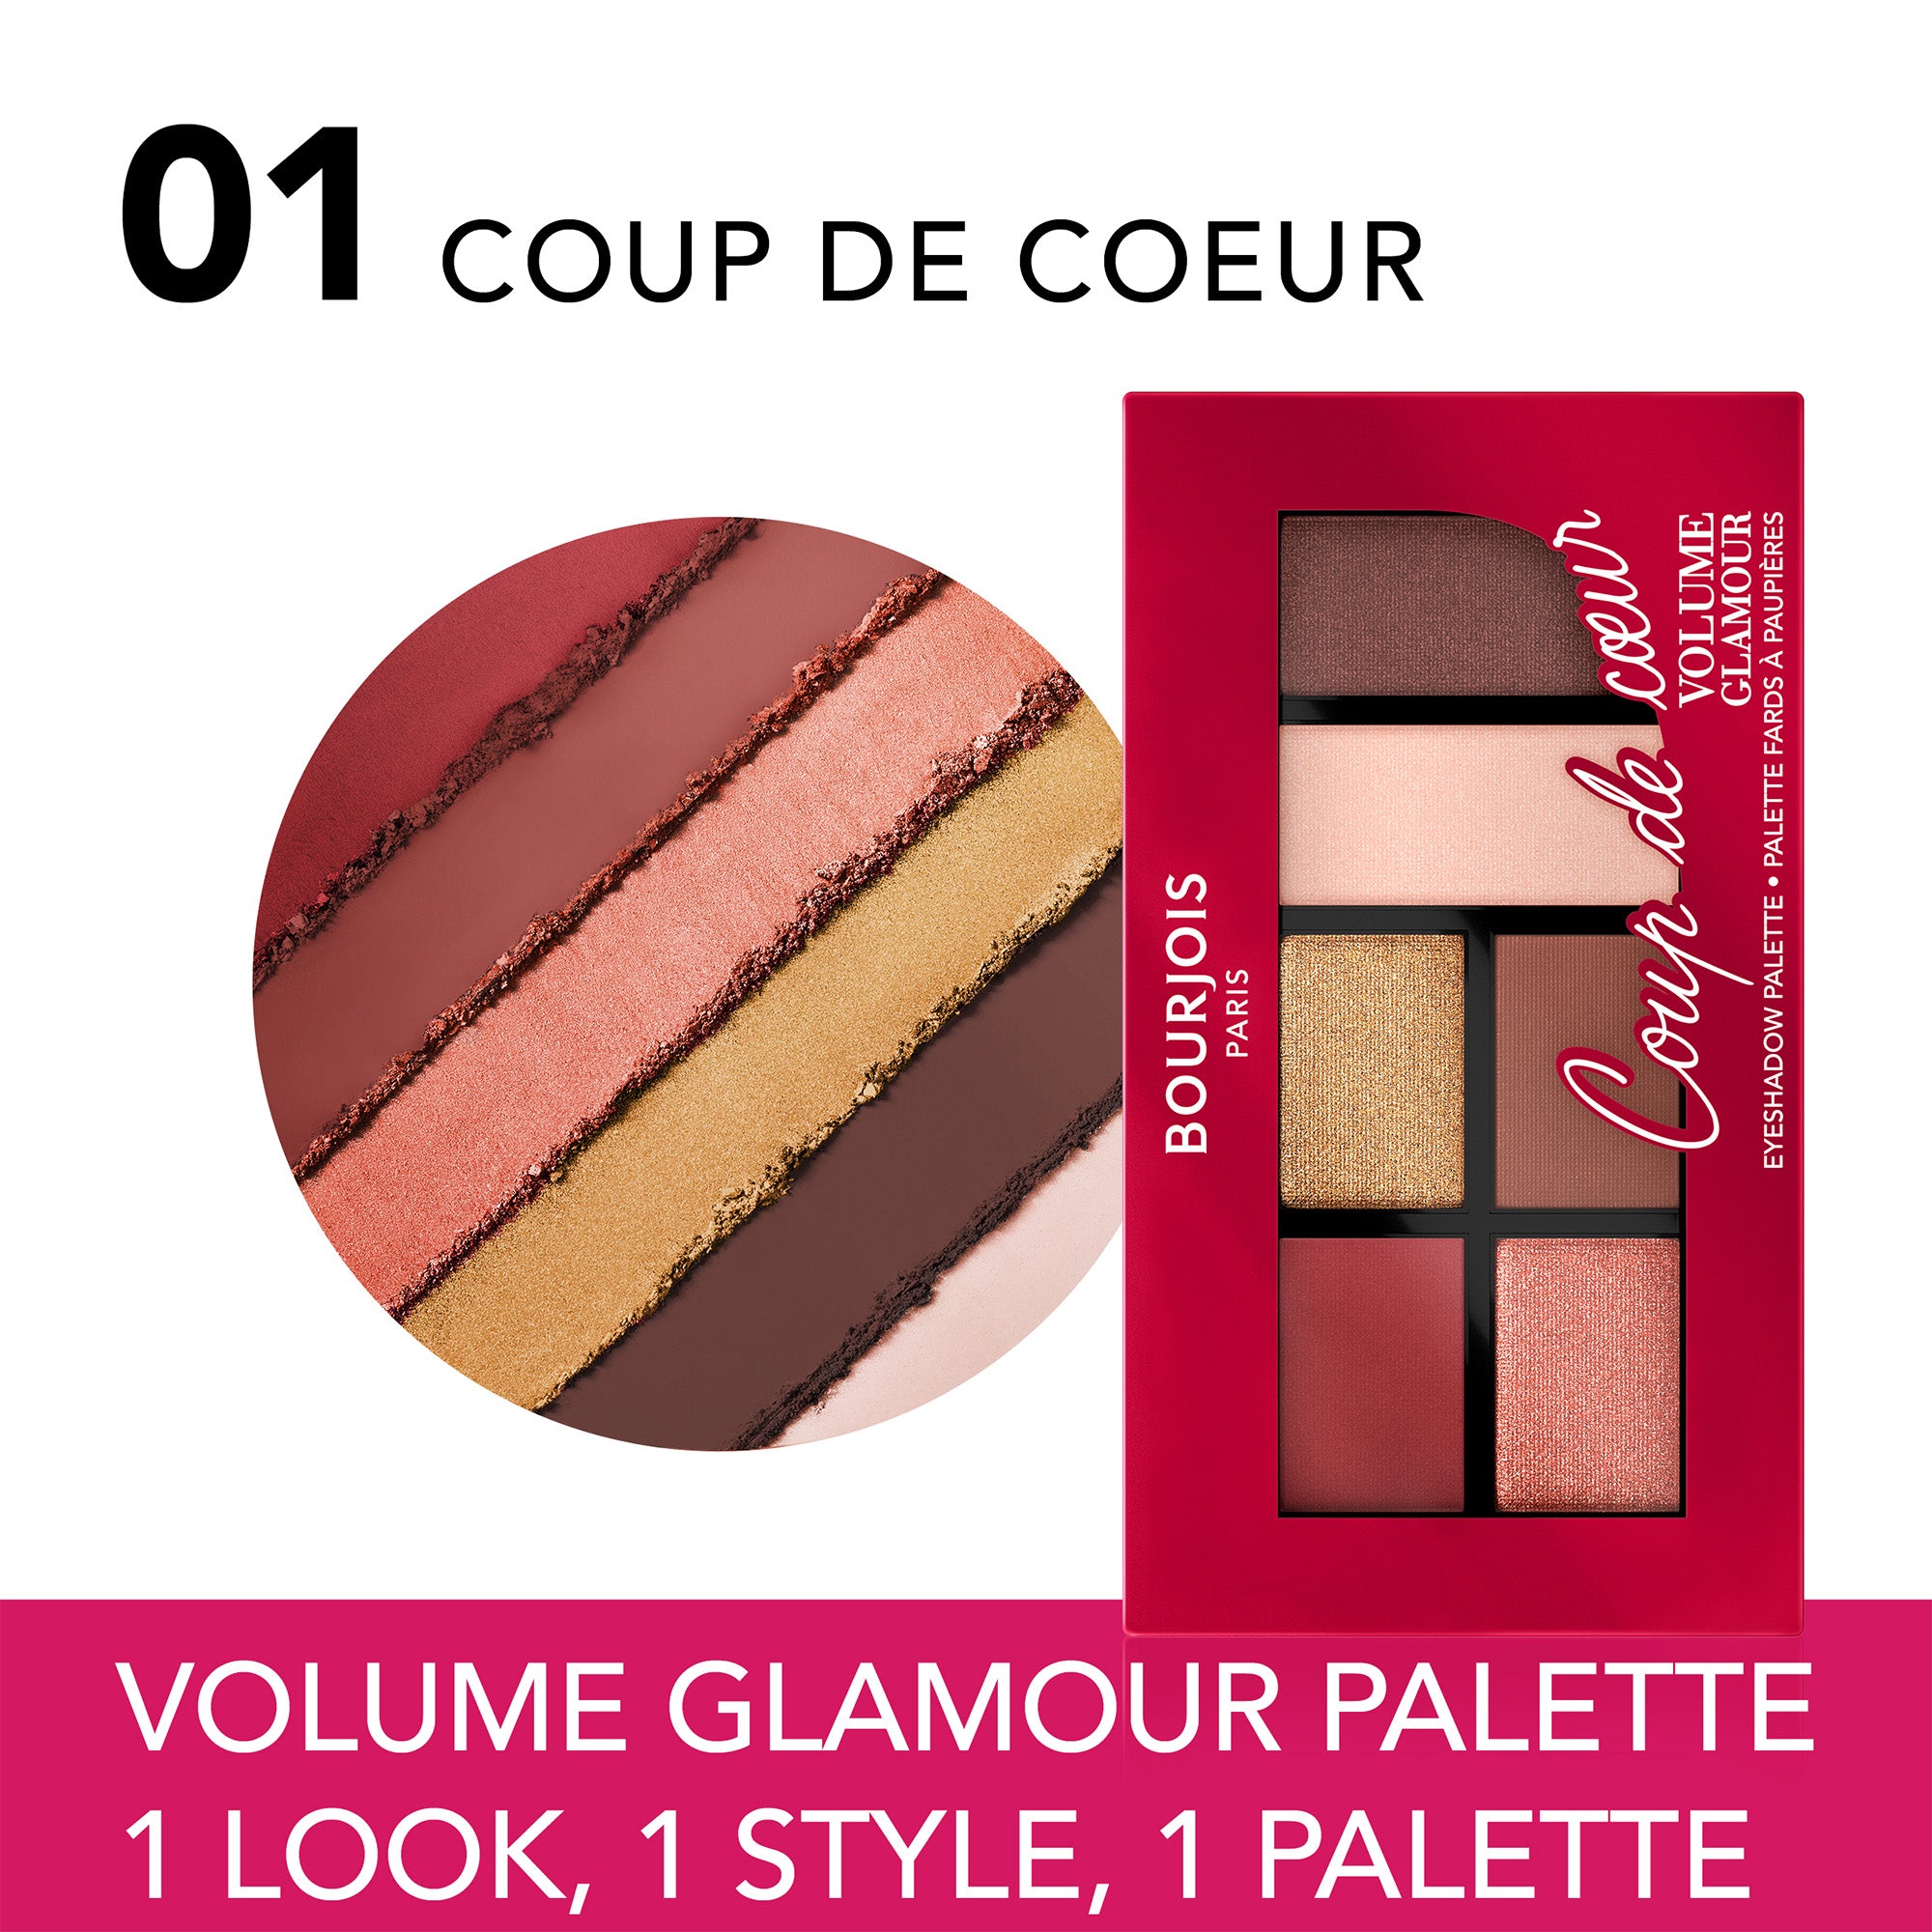 Volume Glamour Eyeshadow Palette 01 Coup de Coeur